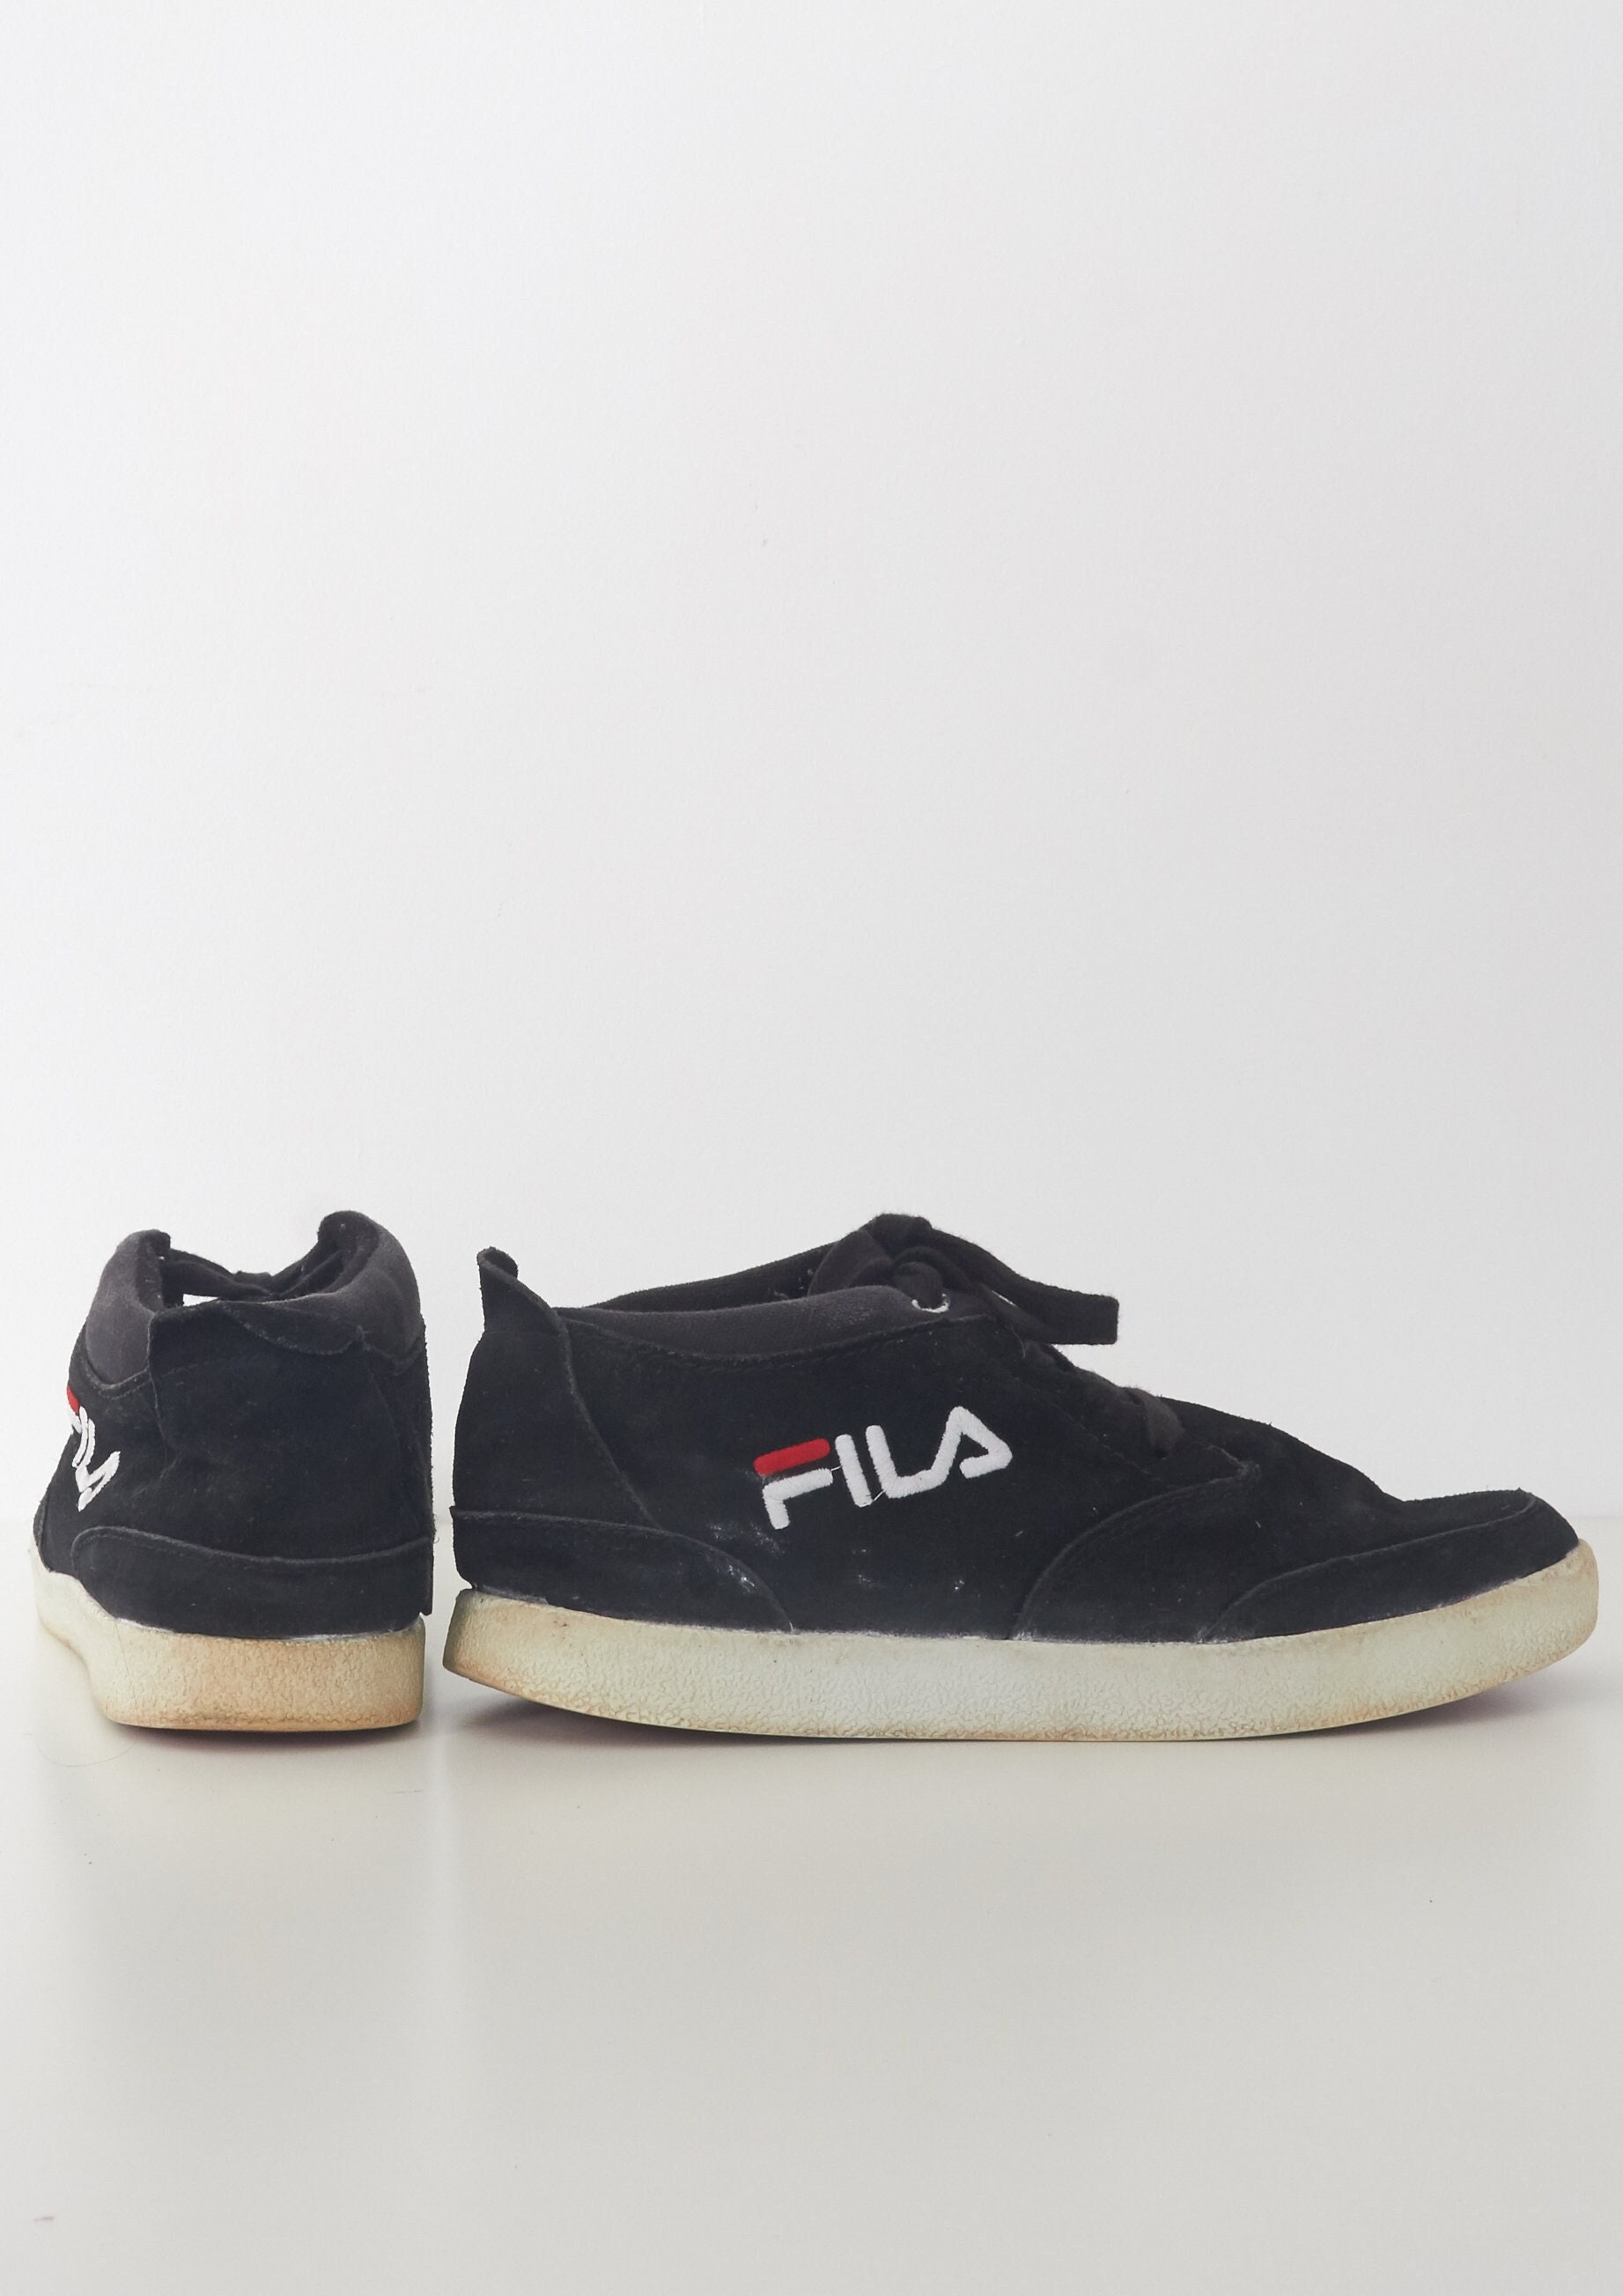 Vintage Black FILA Suede Trainers Size UK 5.5 EU 39 - Israel